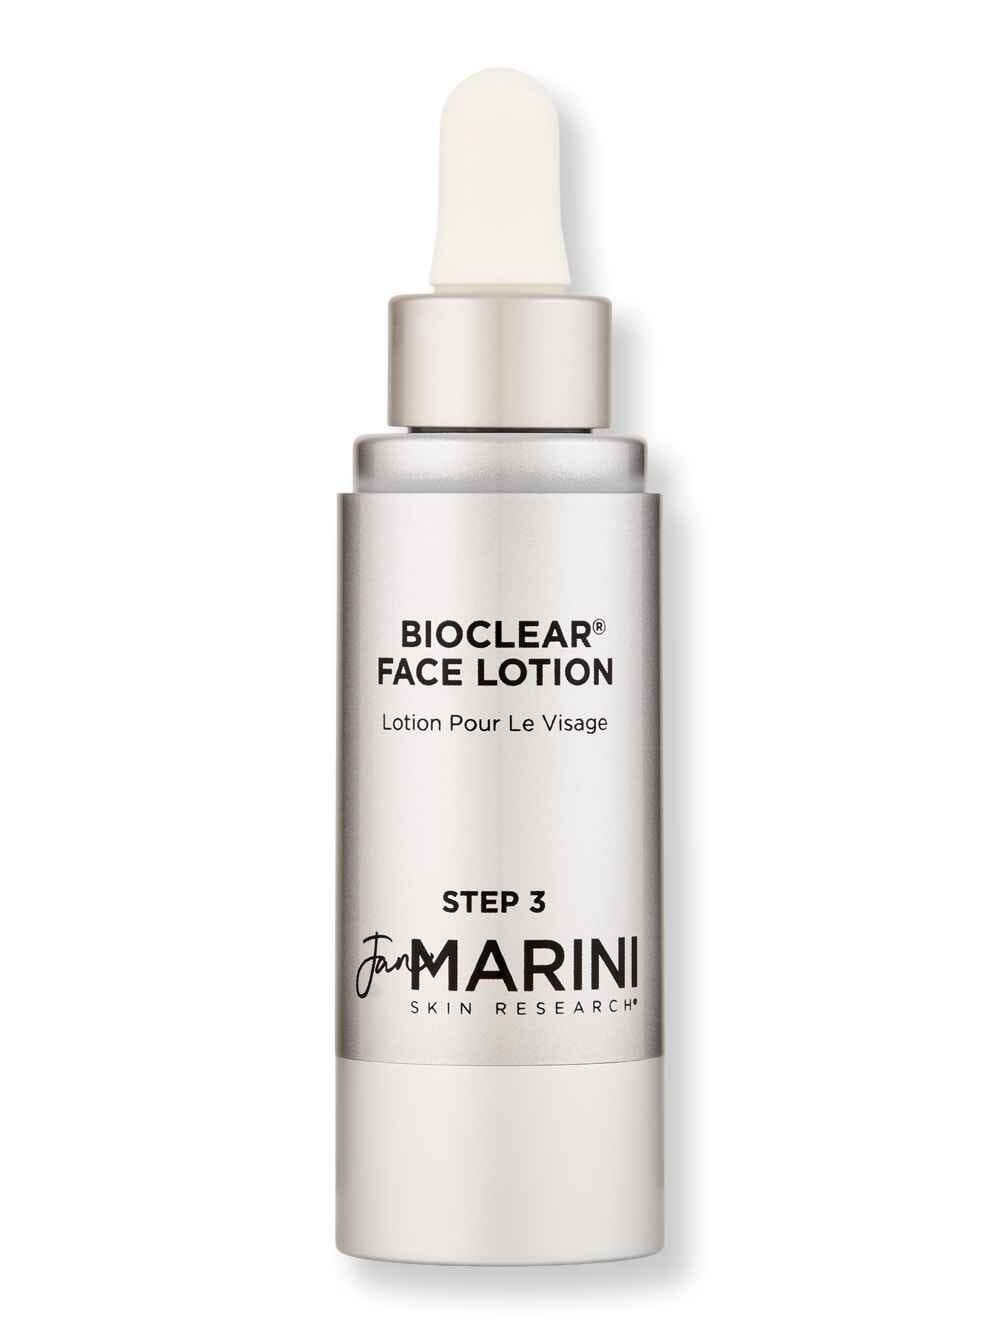 Jan Marini Jan Marini Bioclear Face Lotion 1 oz30 ml Skin Care Treatments 